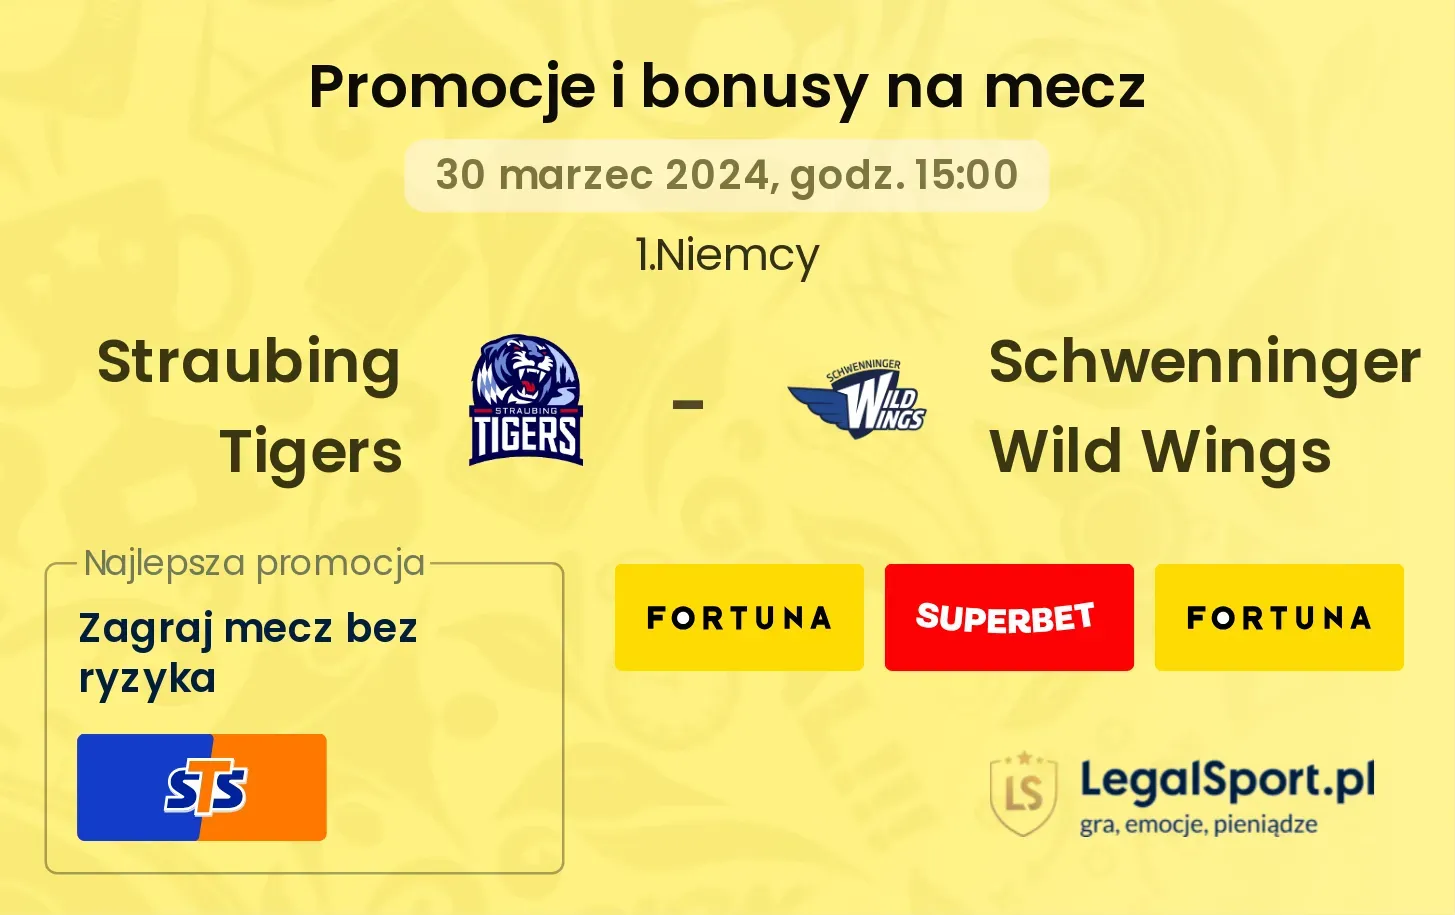  Straubing Tigers - Schwenninger Wild Wings promocje bonusy na mecz